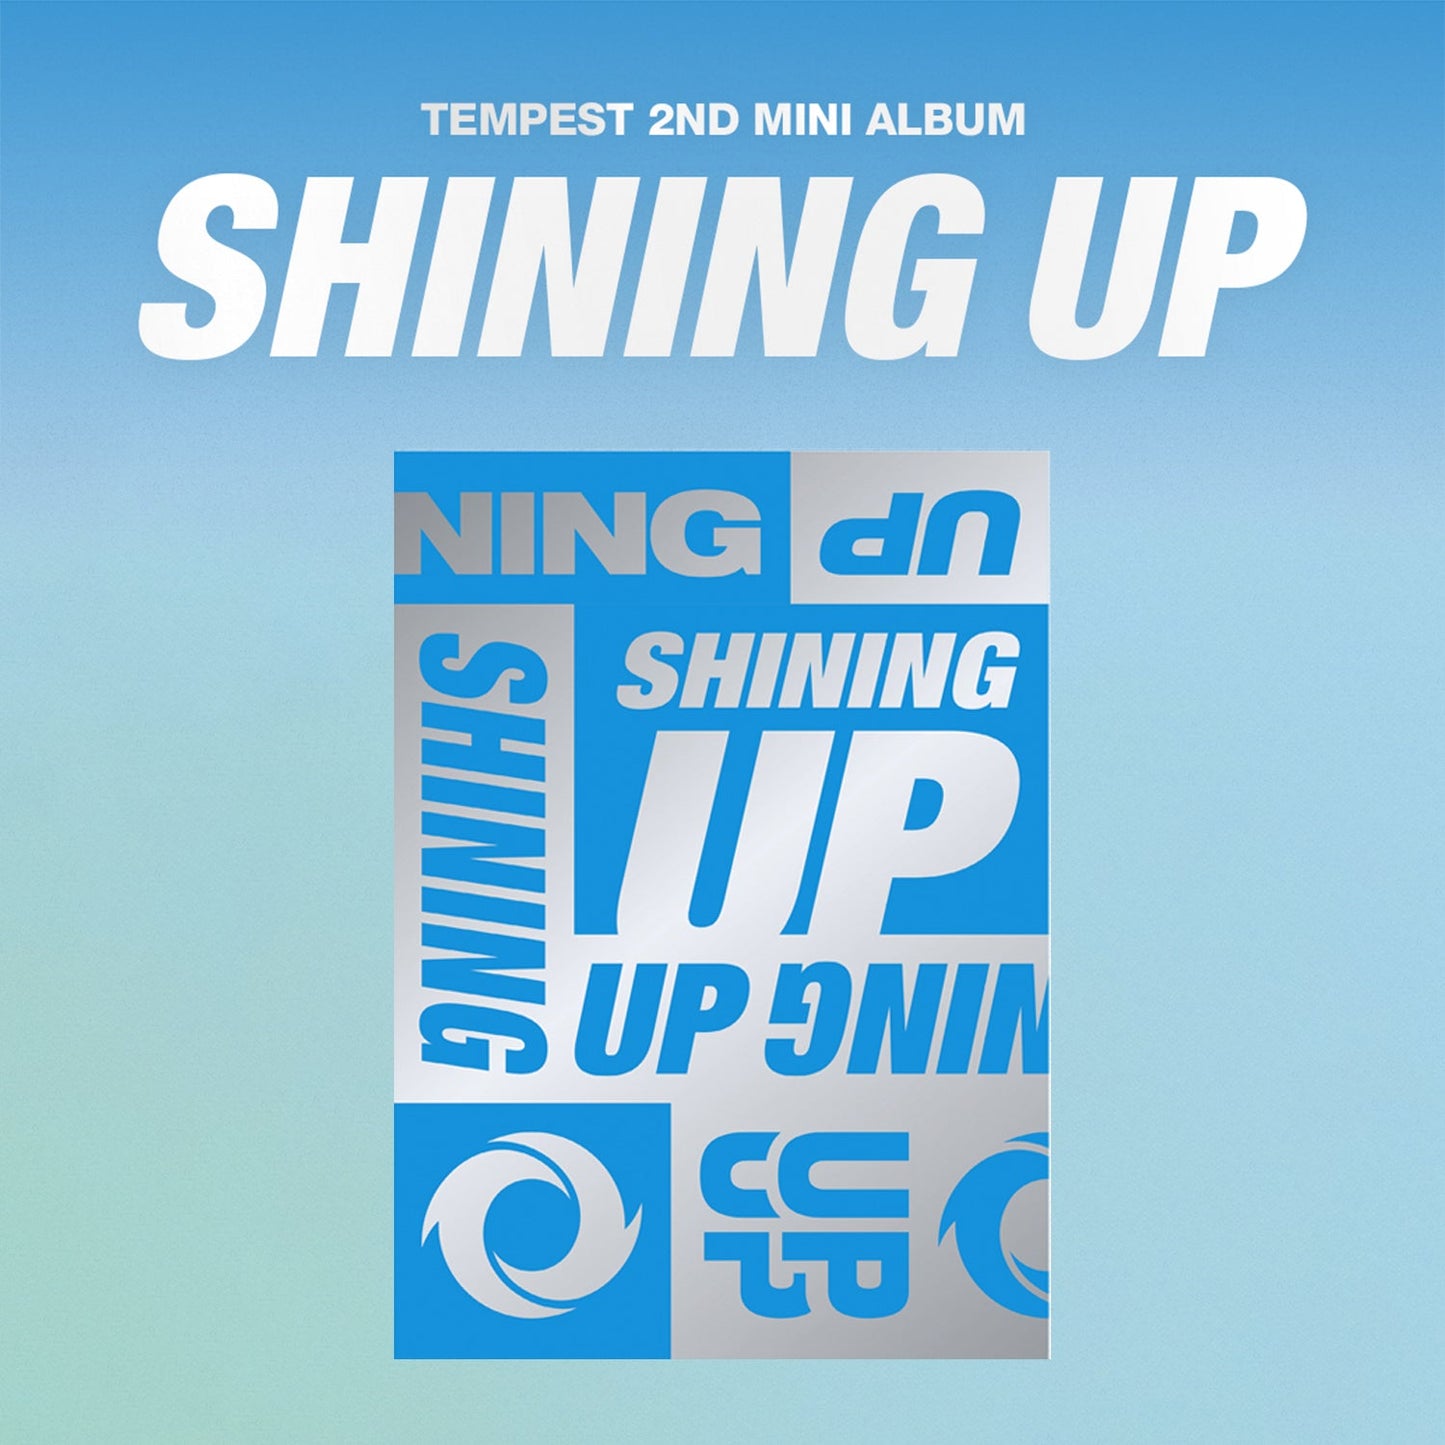 TEMPEST 2ND MINI ALBUM 'SHINING UP' MOONLIGHT VERSION COVER